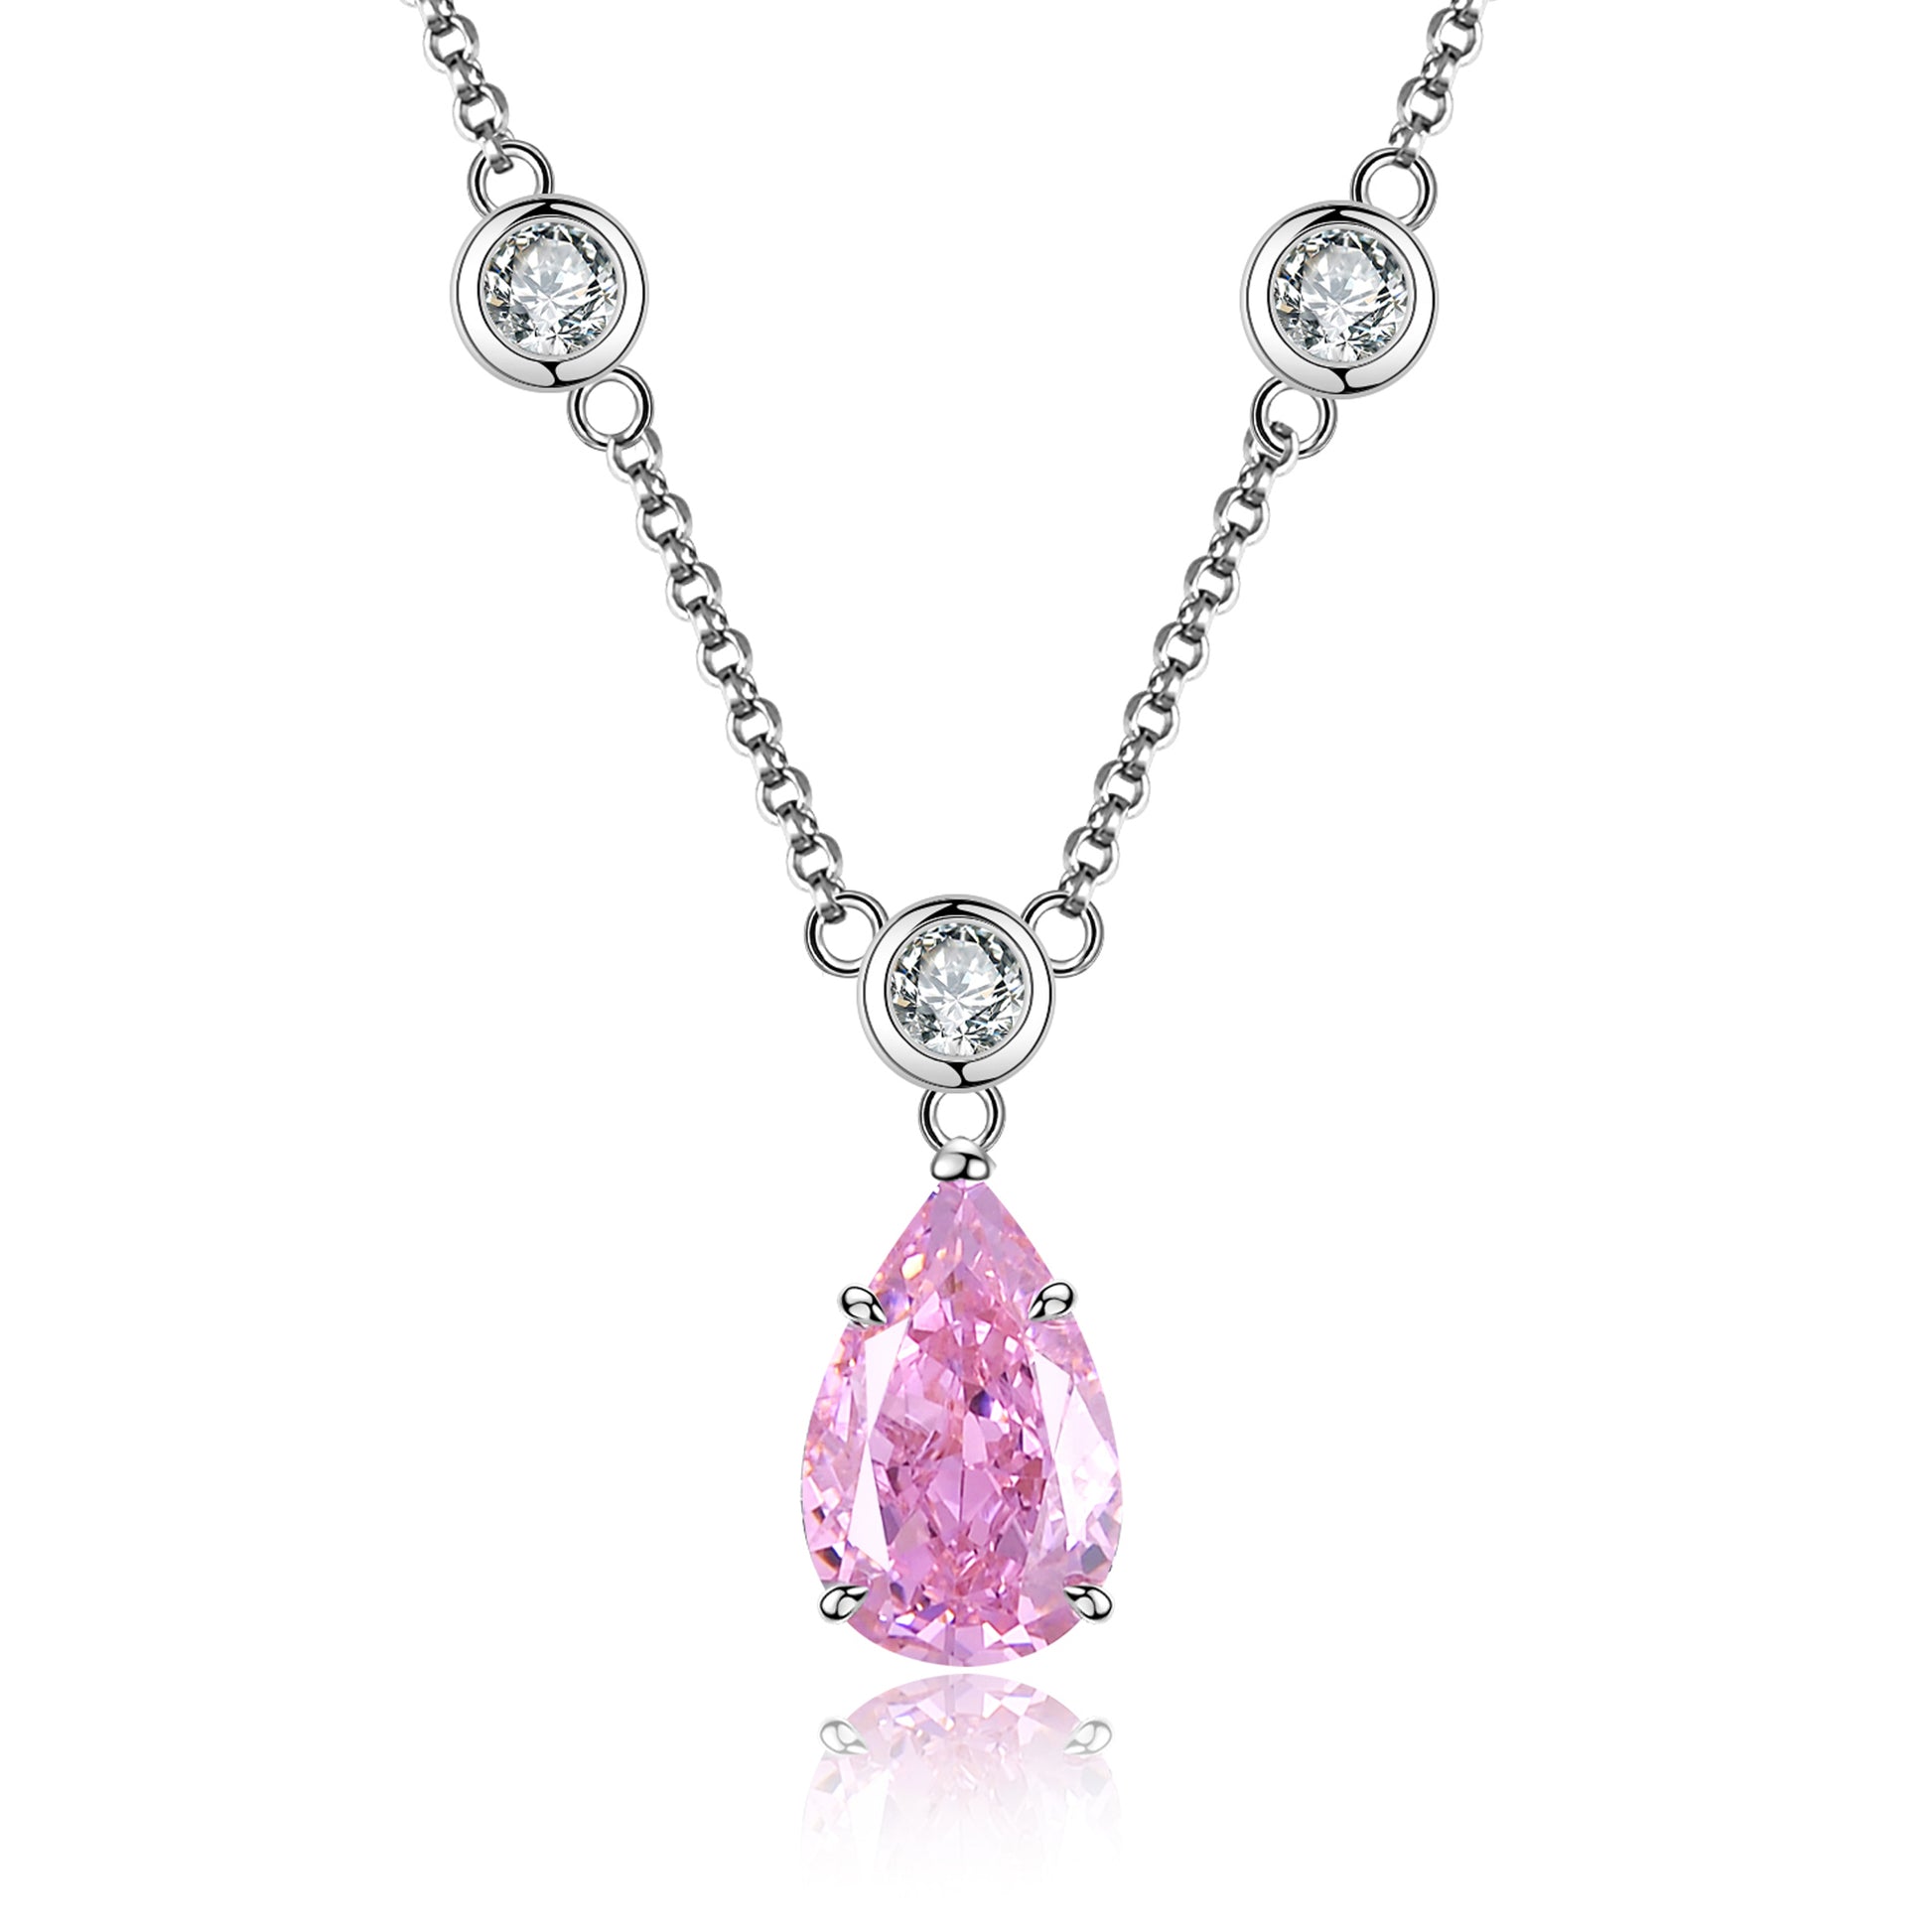 FairyLocus 4ct "Fairy Tears“ Pink Pear Cut Sterling Silver Necklace FLCYBSNL13 FairyLocus